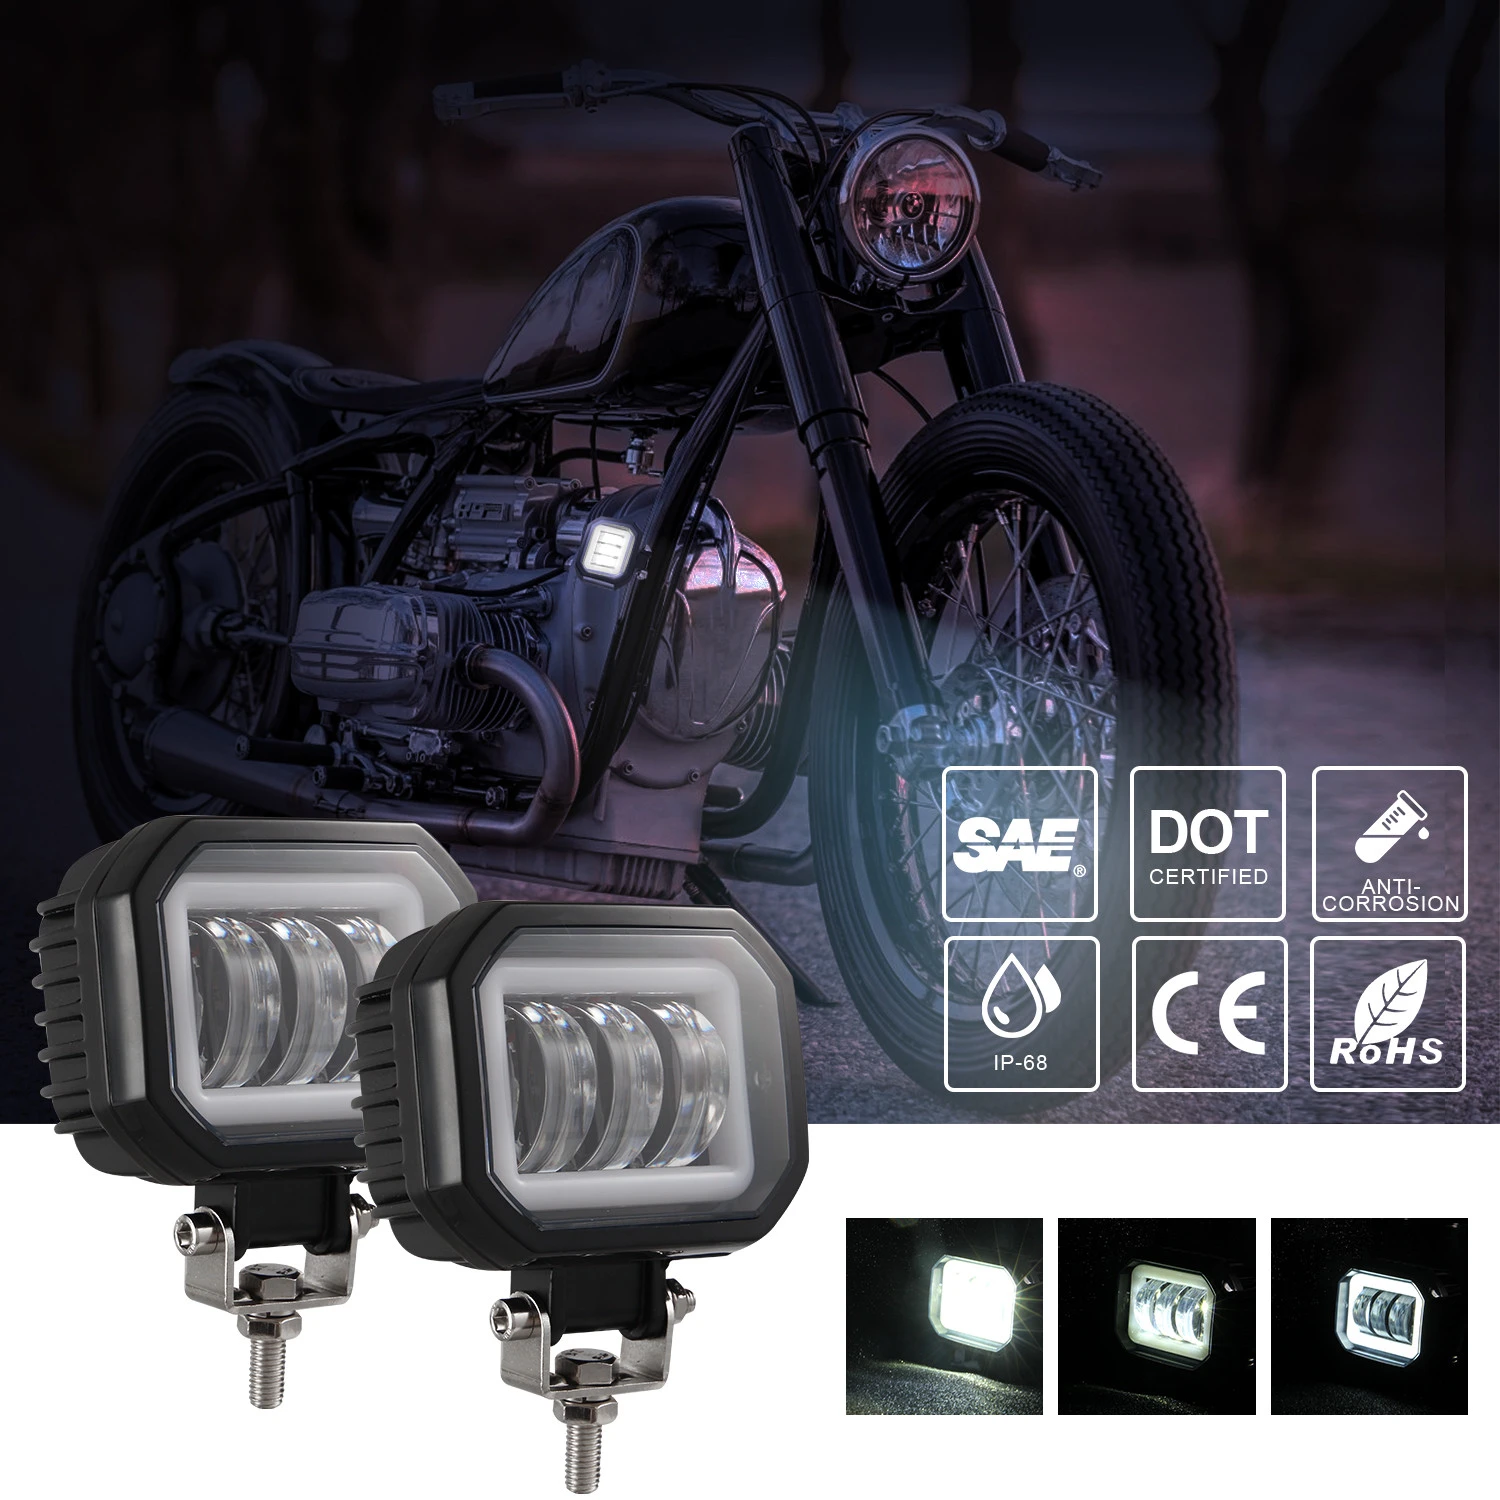 12v-30v 30W Waterproof motorbikes light accessories LED truck spot lights led lights for motorcycle